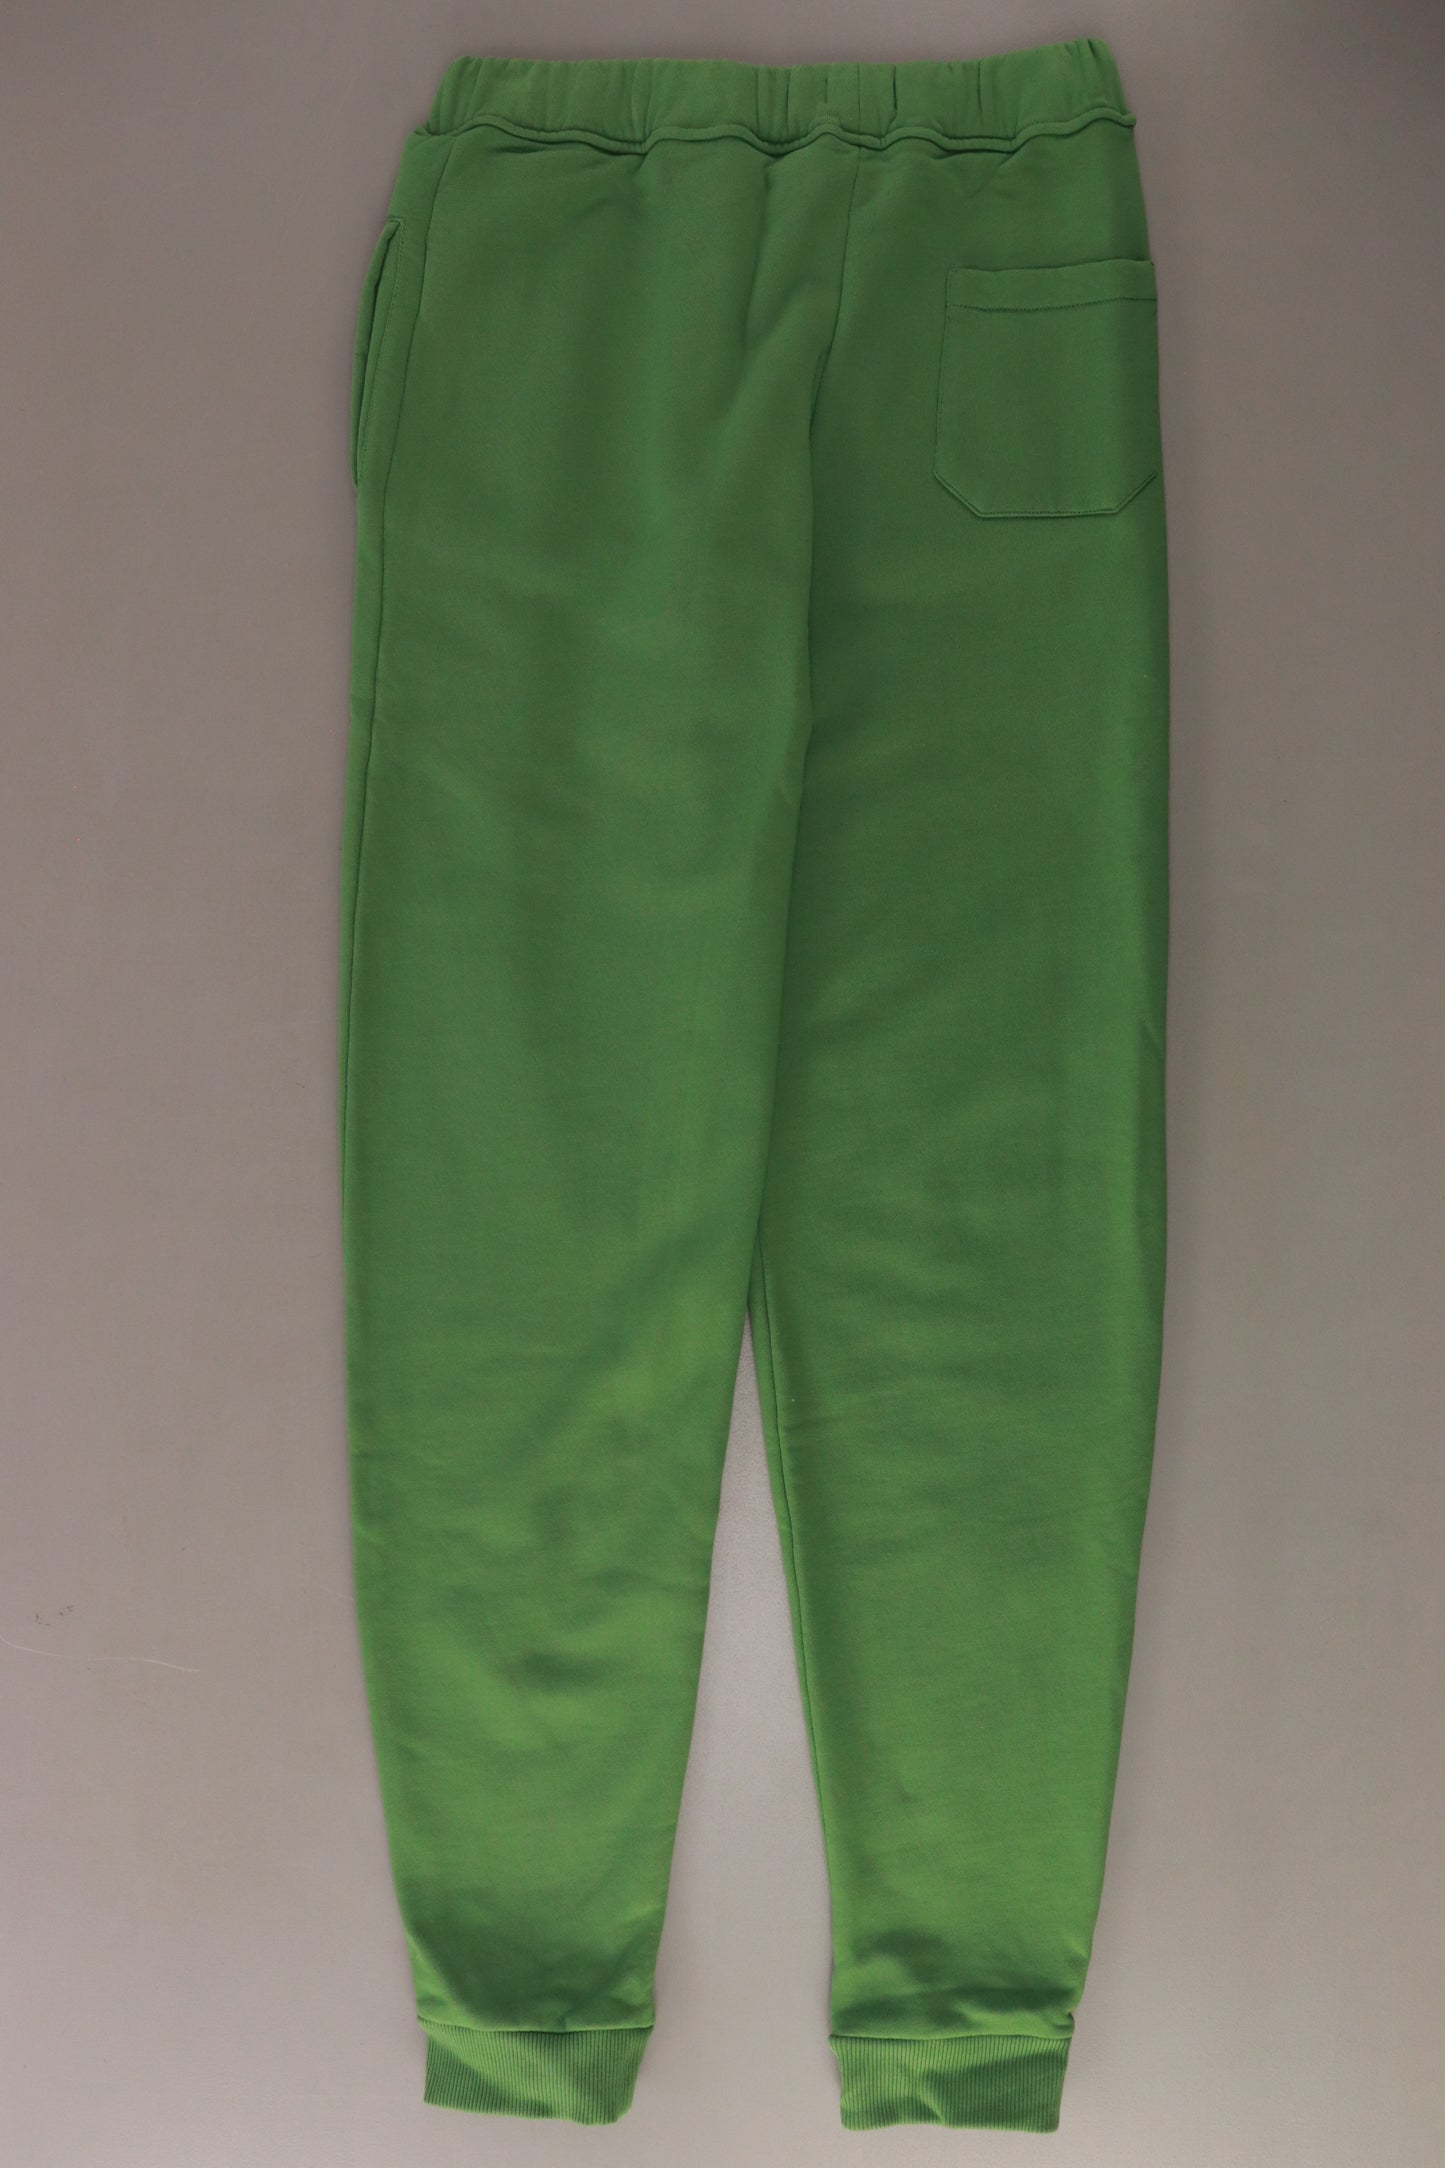 Repose AMS Kinder Jogginghose "hunter green" grün Größe 14 Jahre, 158 - 164 cm neu mit Etikett